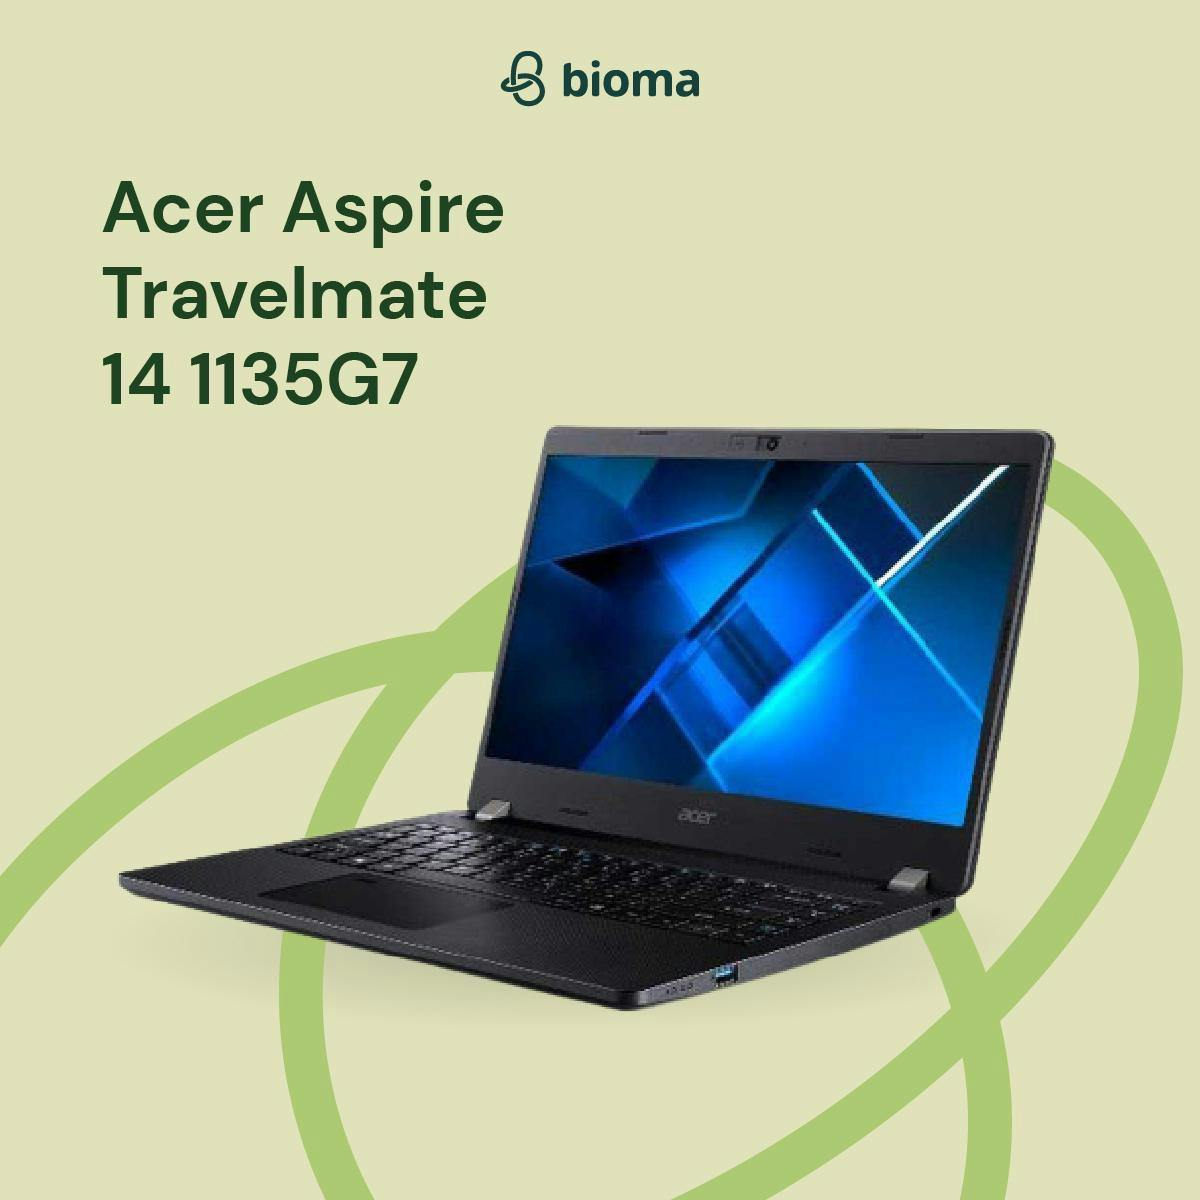 Acer Aspire Travelmate 14 1135G7